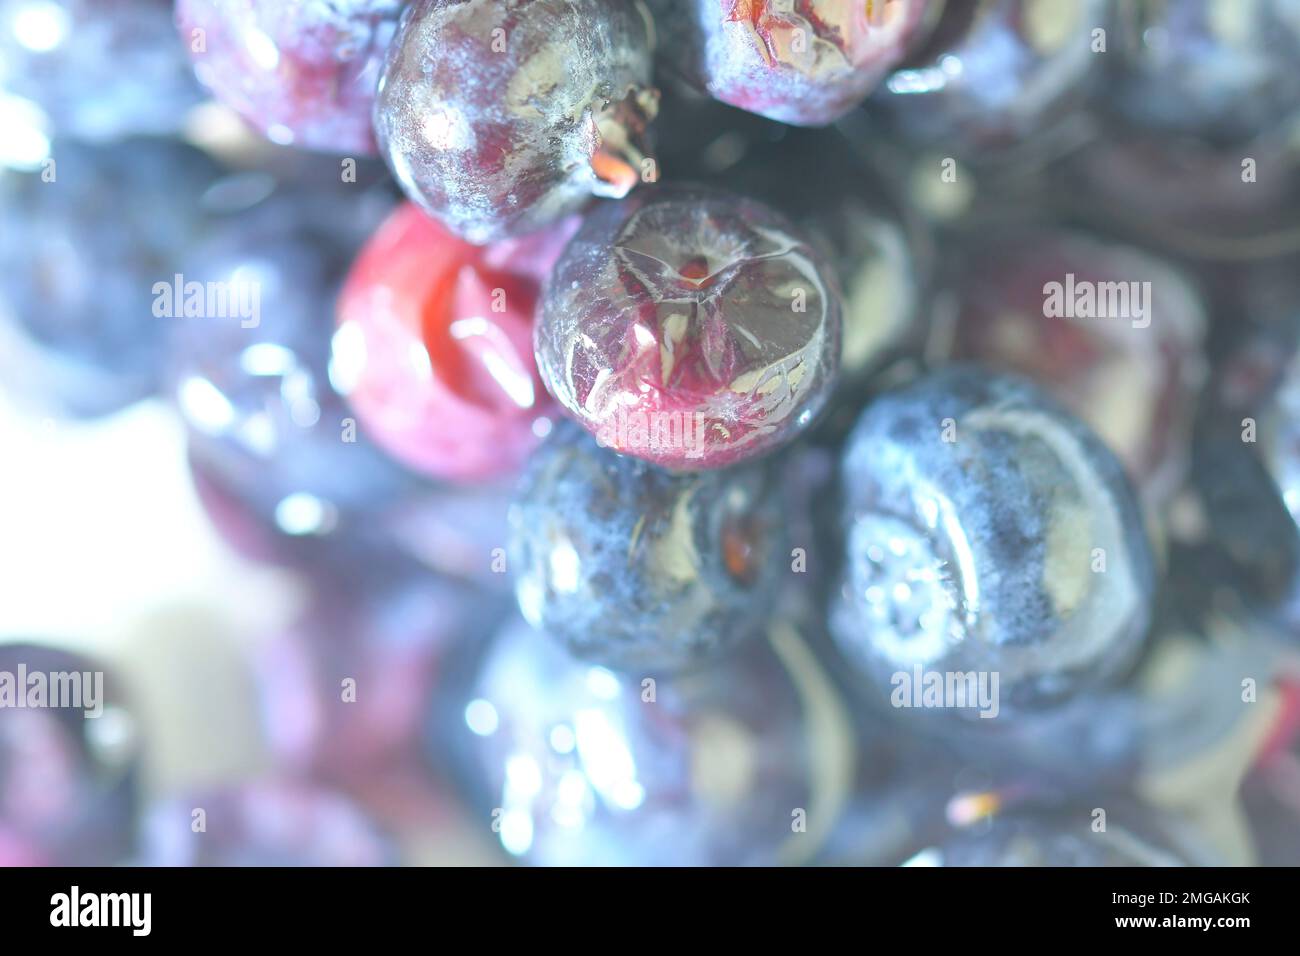 Bilberries wallpaper. Close-up of blueberries background. Shallow DOF. Defocused. Horizonatal macro image. Stock Photo